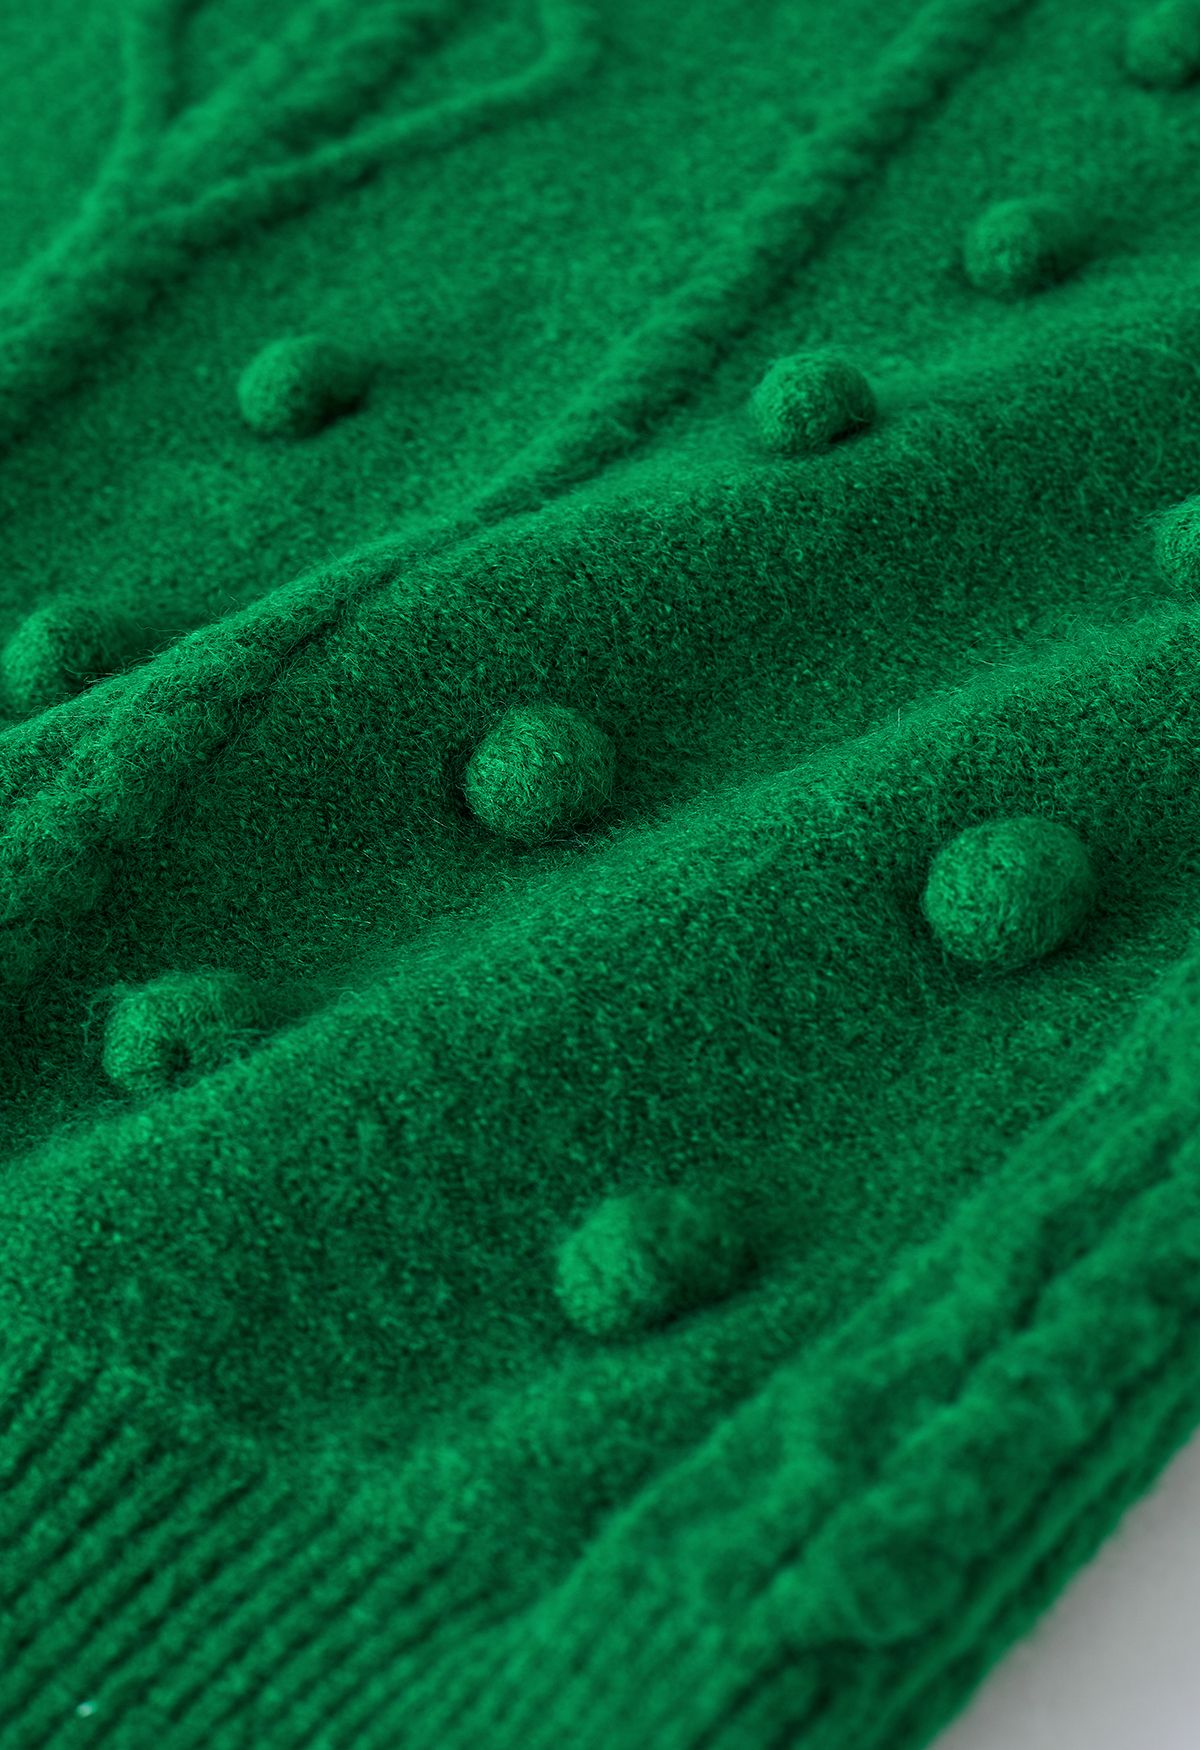 Zopfmuster-Pullover mit Pom-Pom-Besatz in Grün